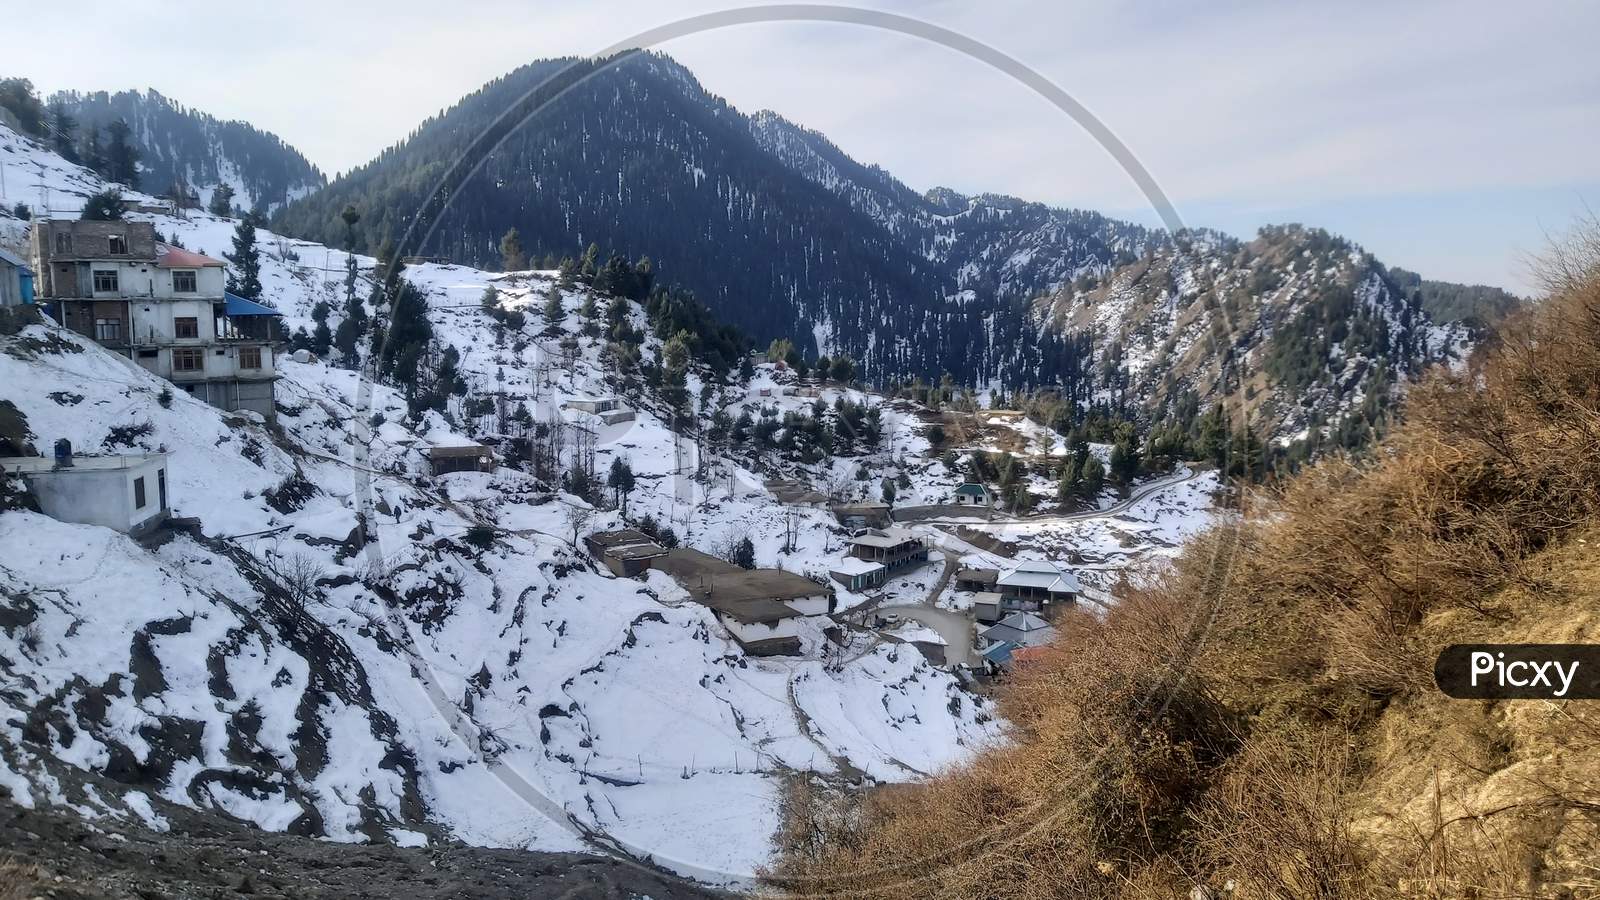 Snow falling start in Mountain range malam Jabba swat Valley